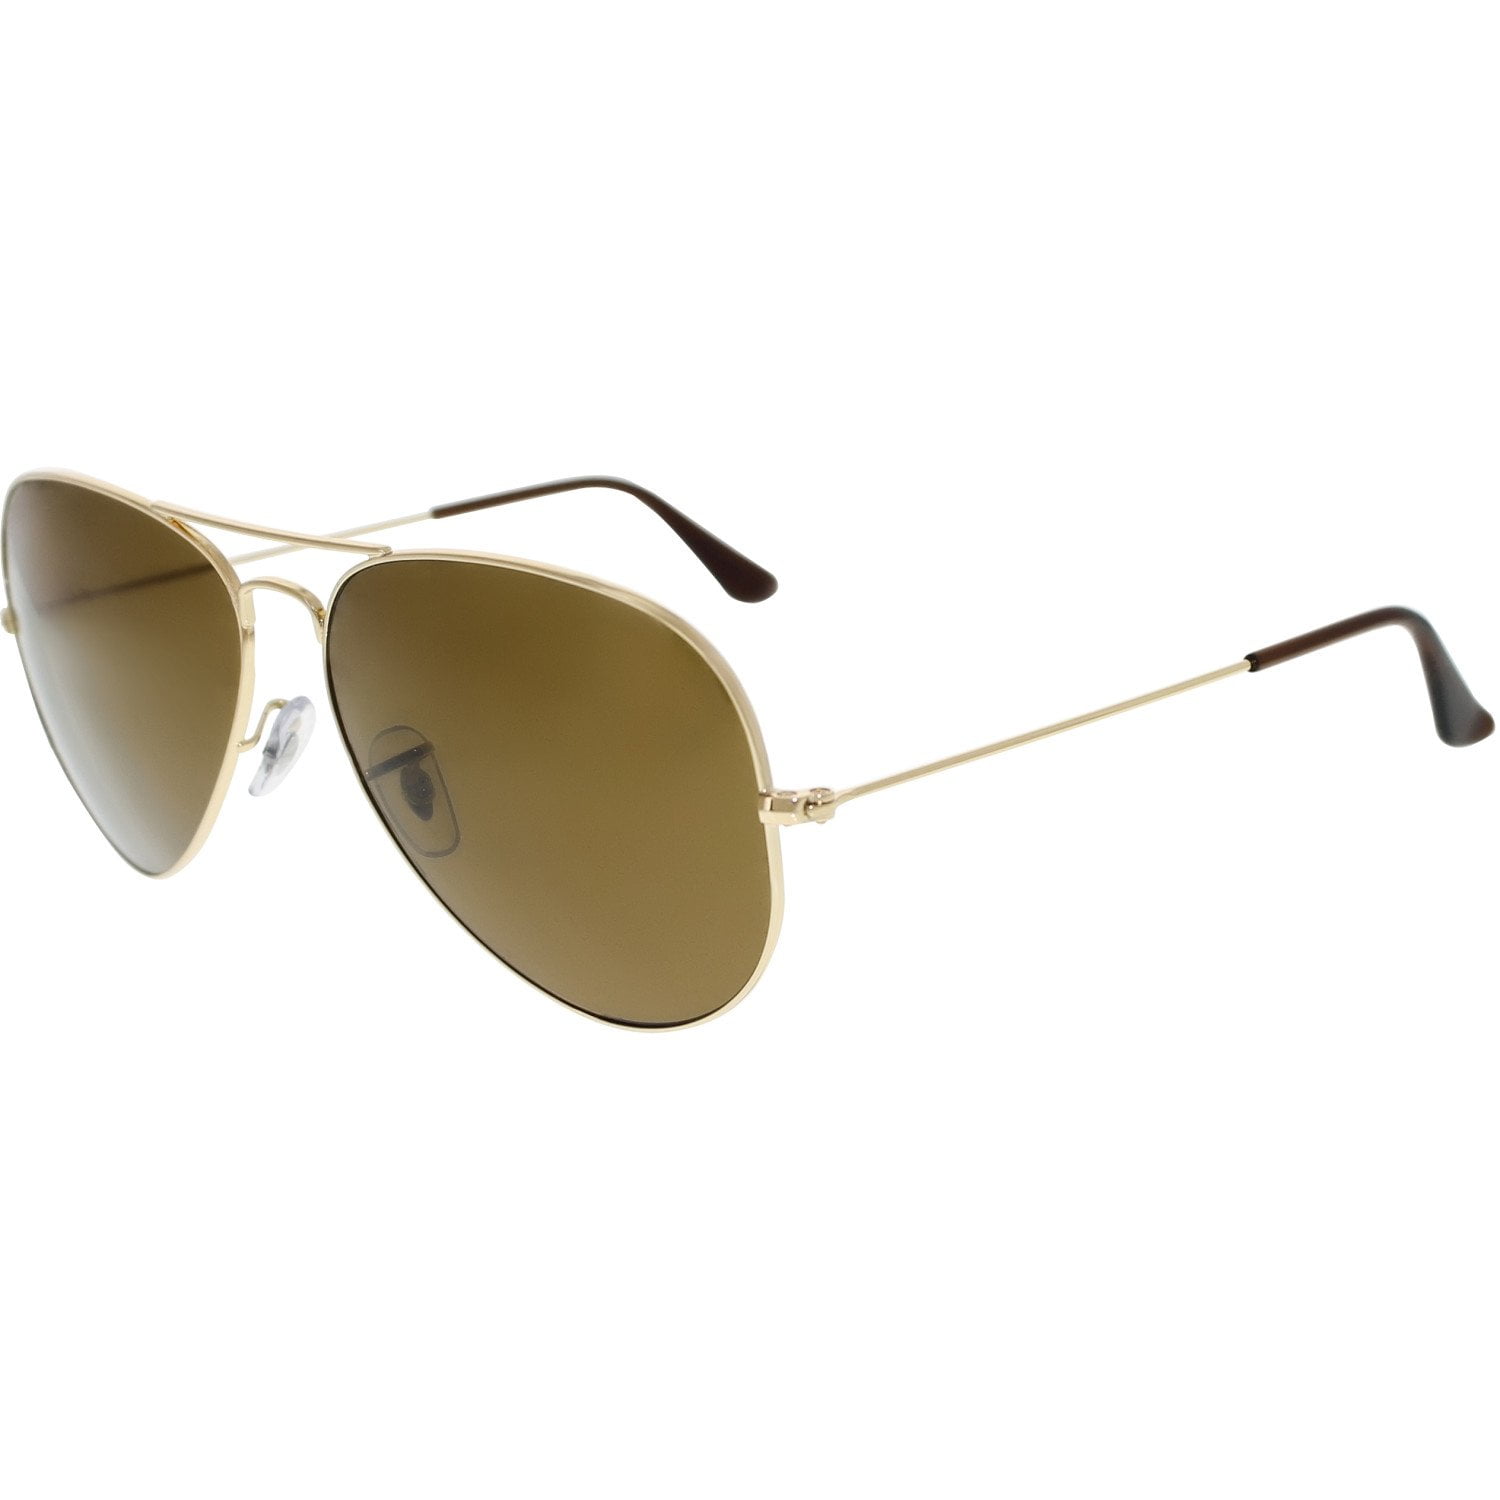 Ray-ban Sunglasses Aviator Gradient Unisex Gold Frame Brown Lenses 58-14